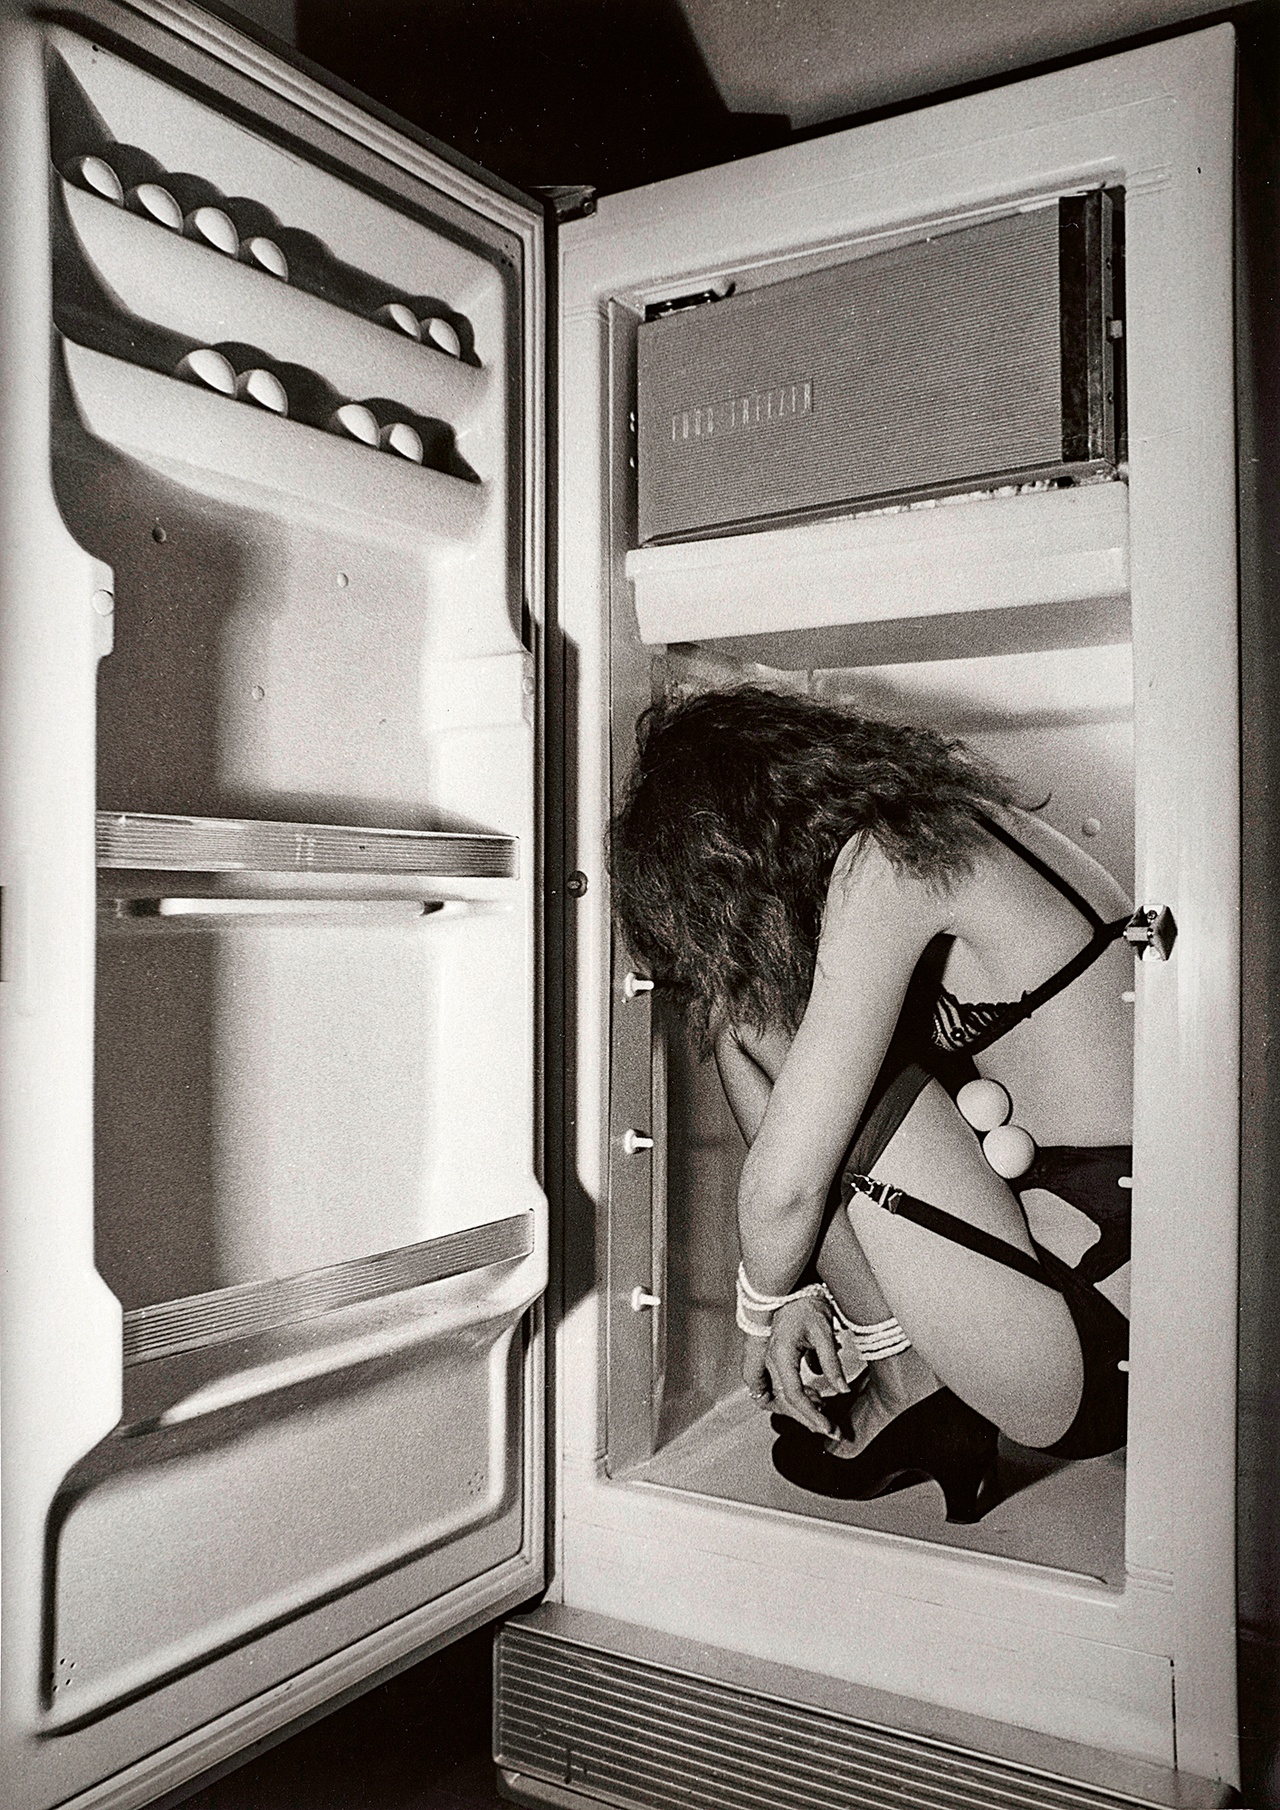 Jimmy DeSana, “Refrigerator,” 1977–78